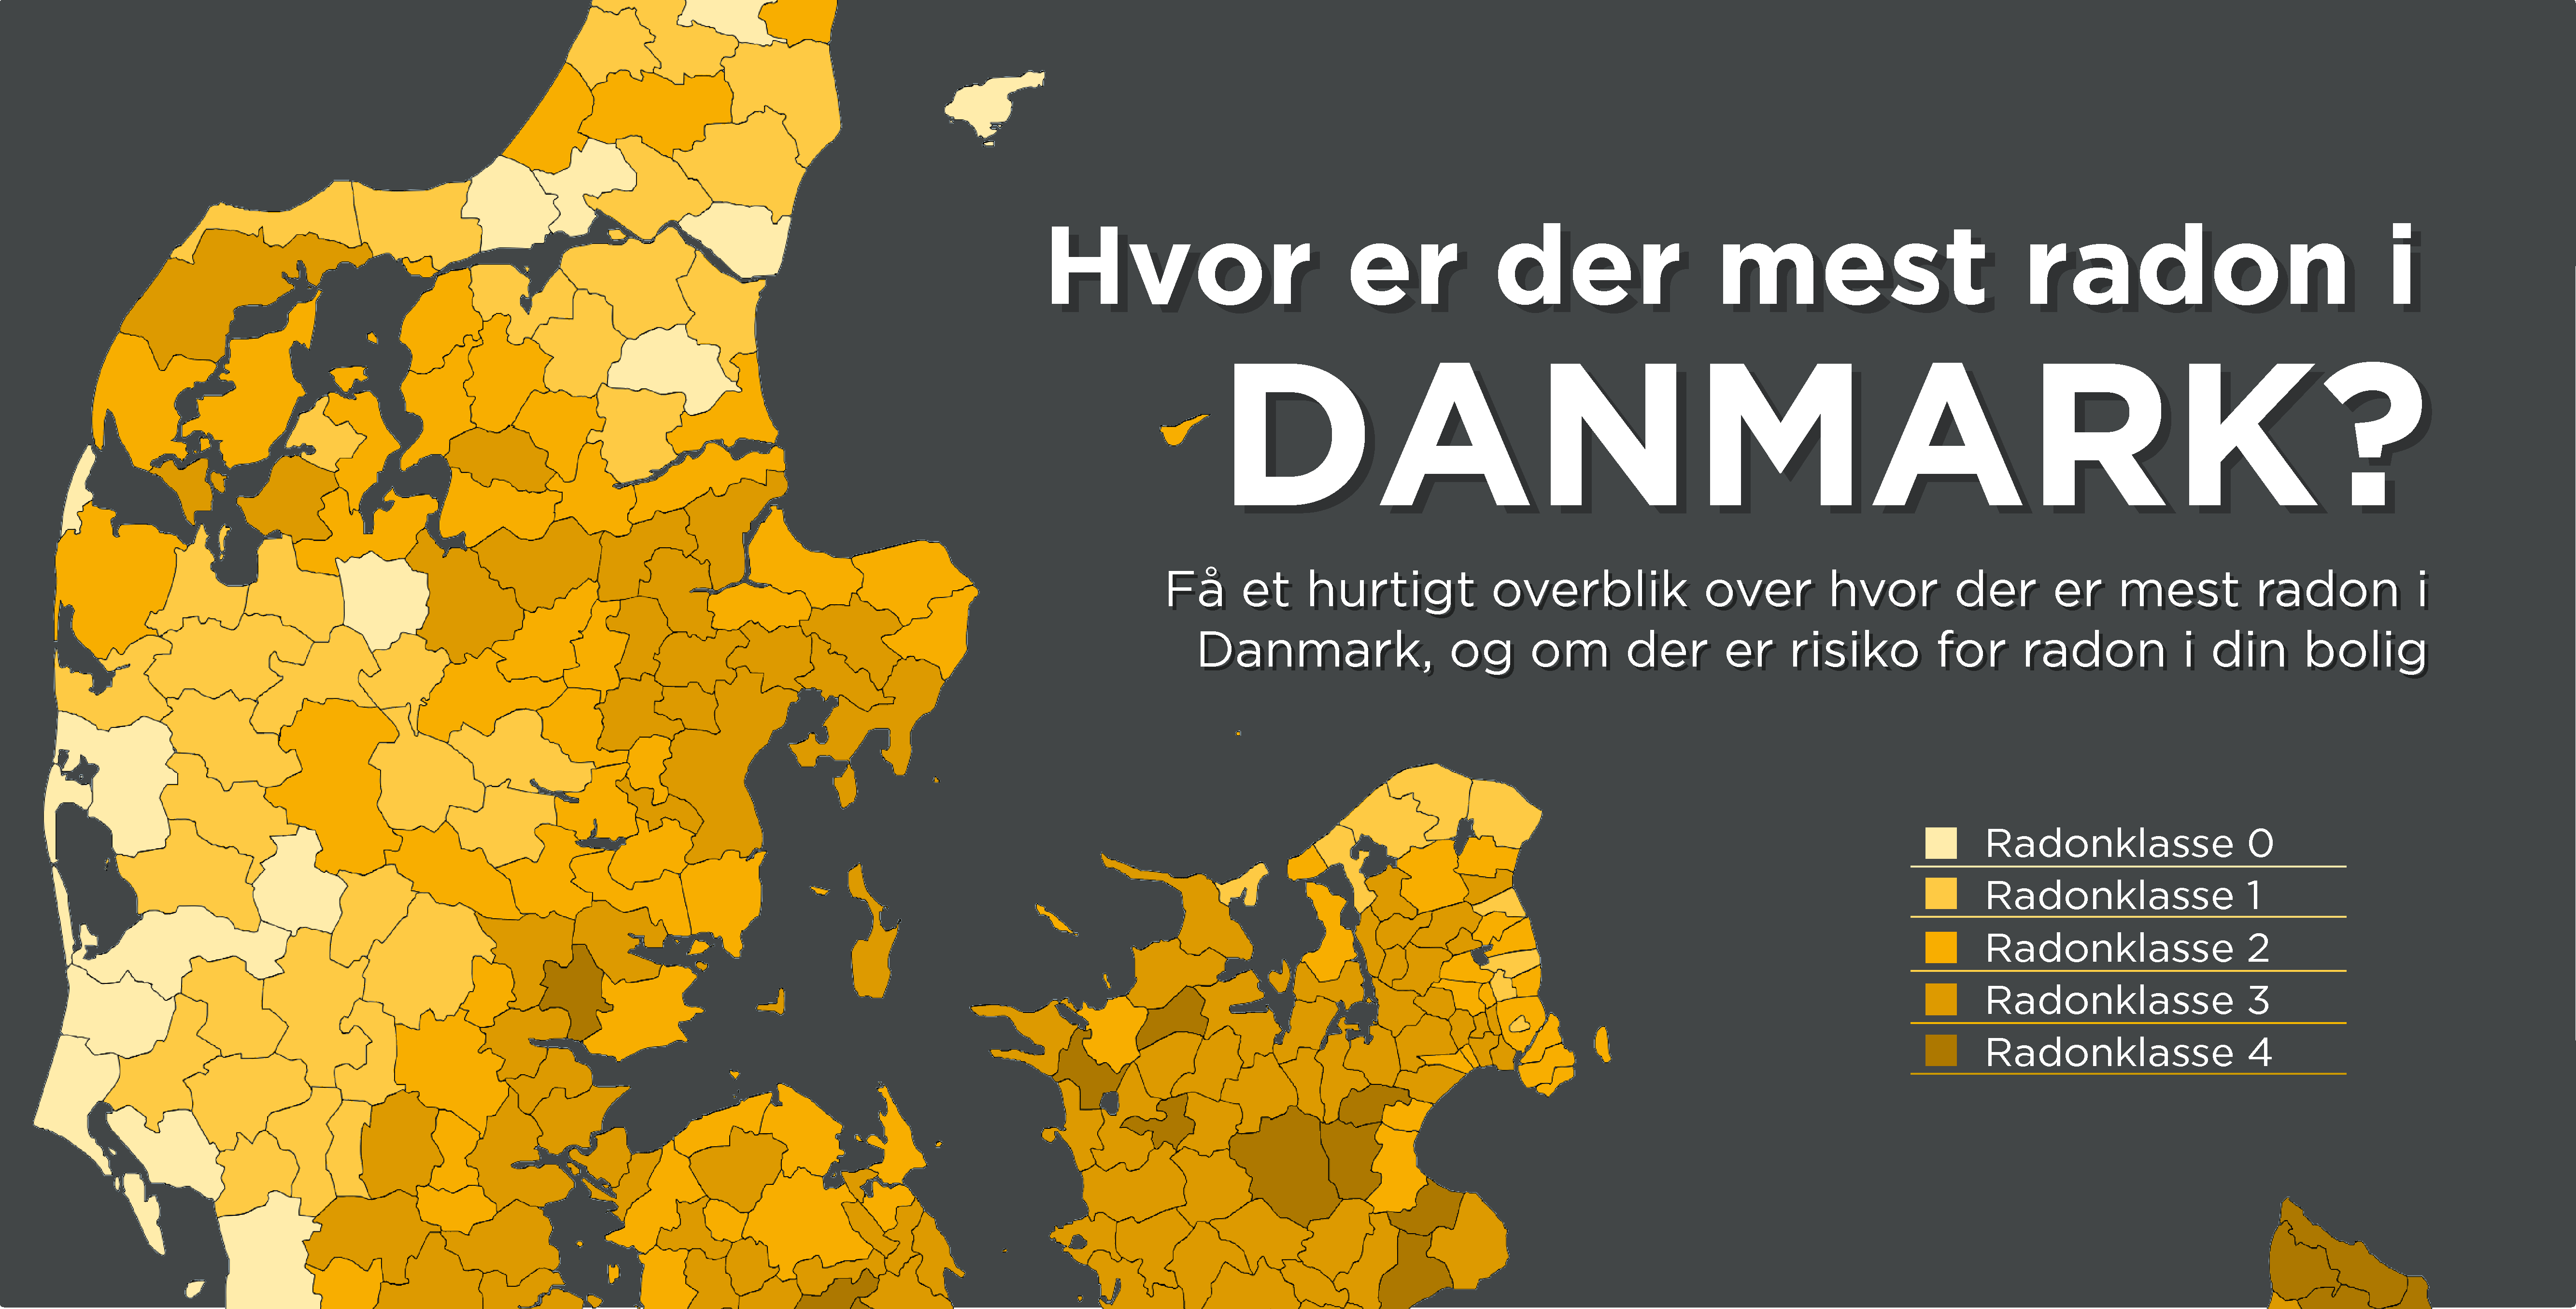 Kort over radon i Danmark - se radonniveau i Danmark